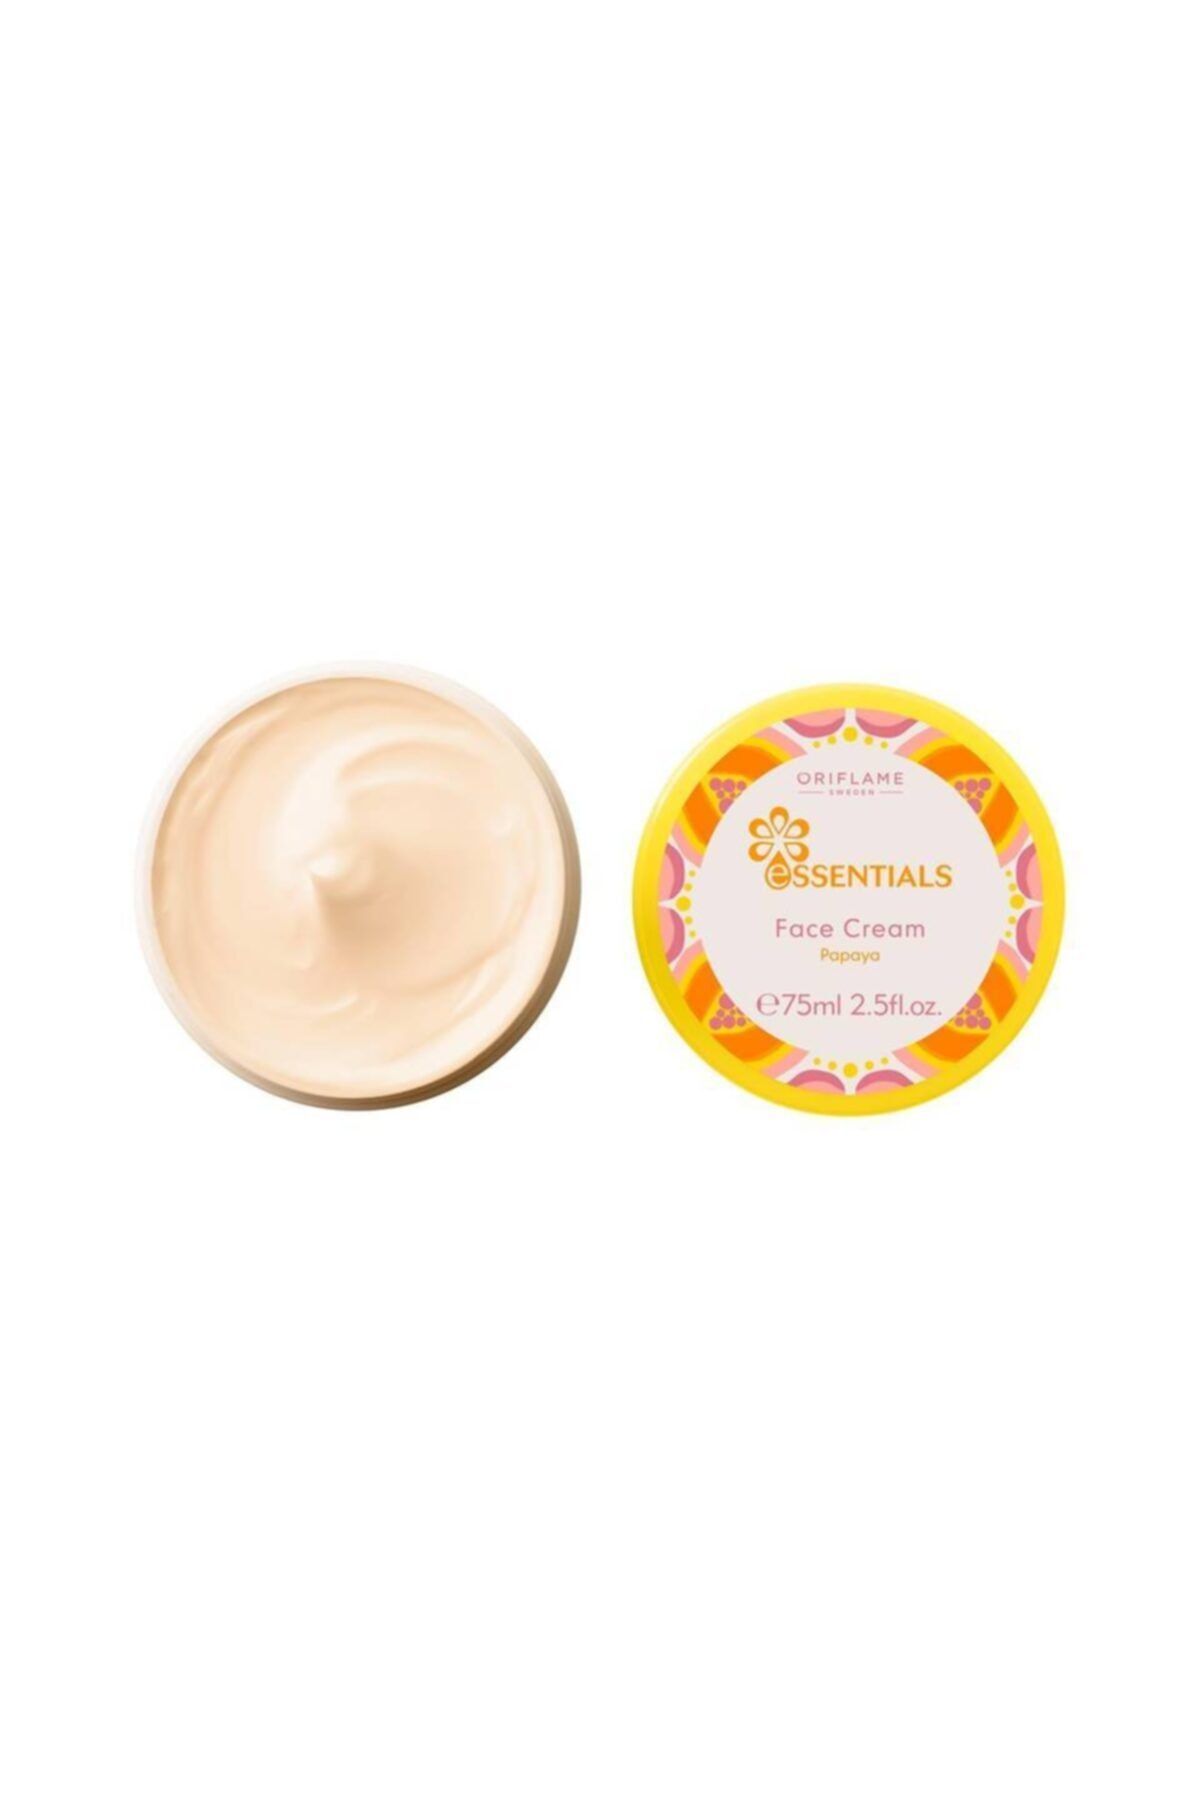 Oriflame Essentials Face Cream Papaya - 75 Ml